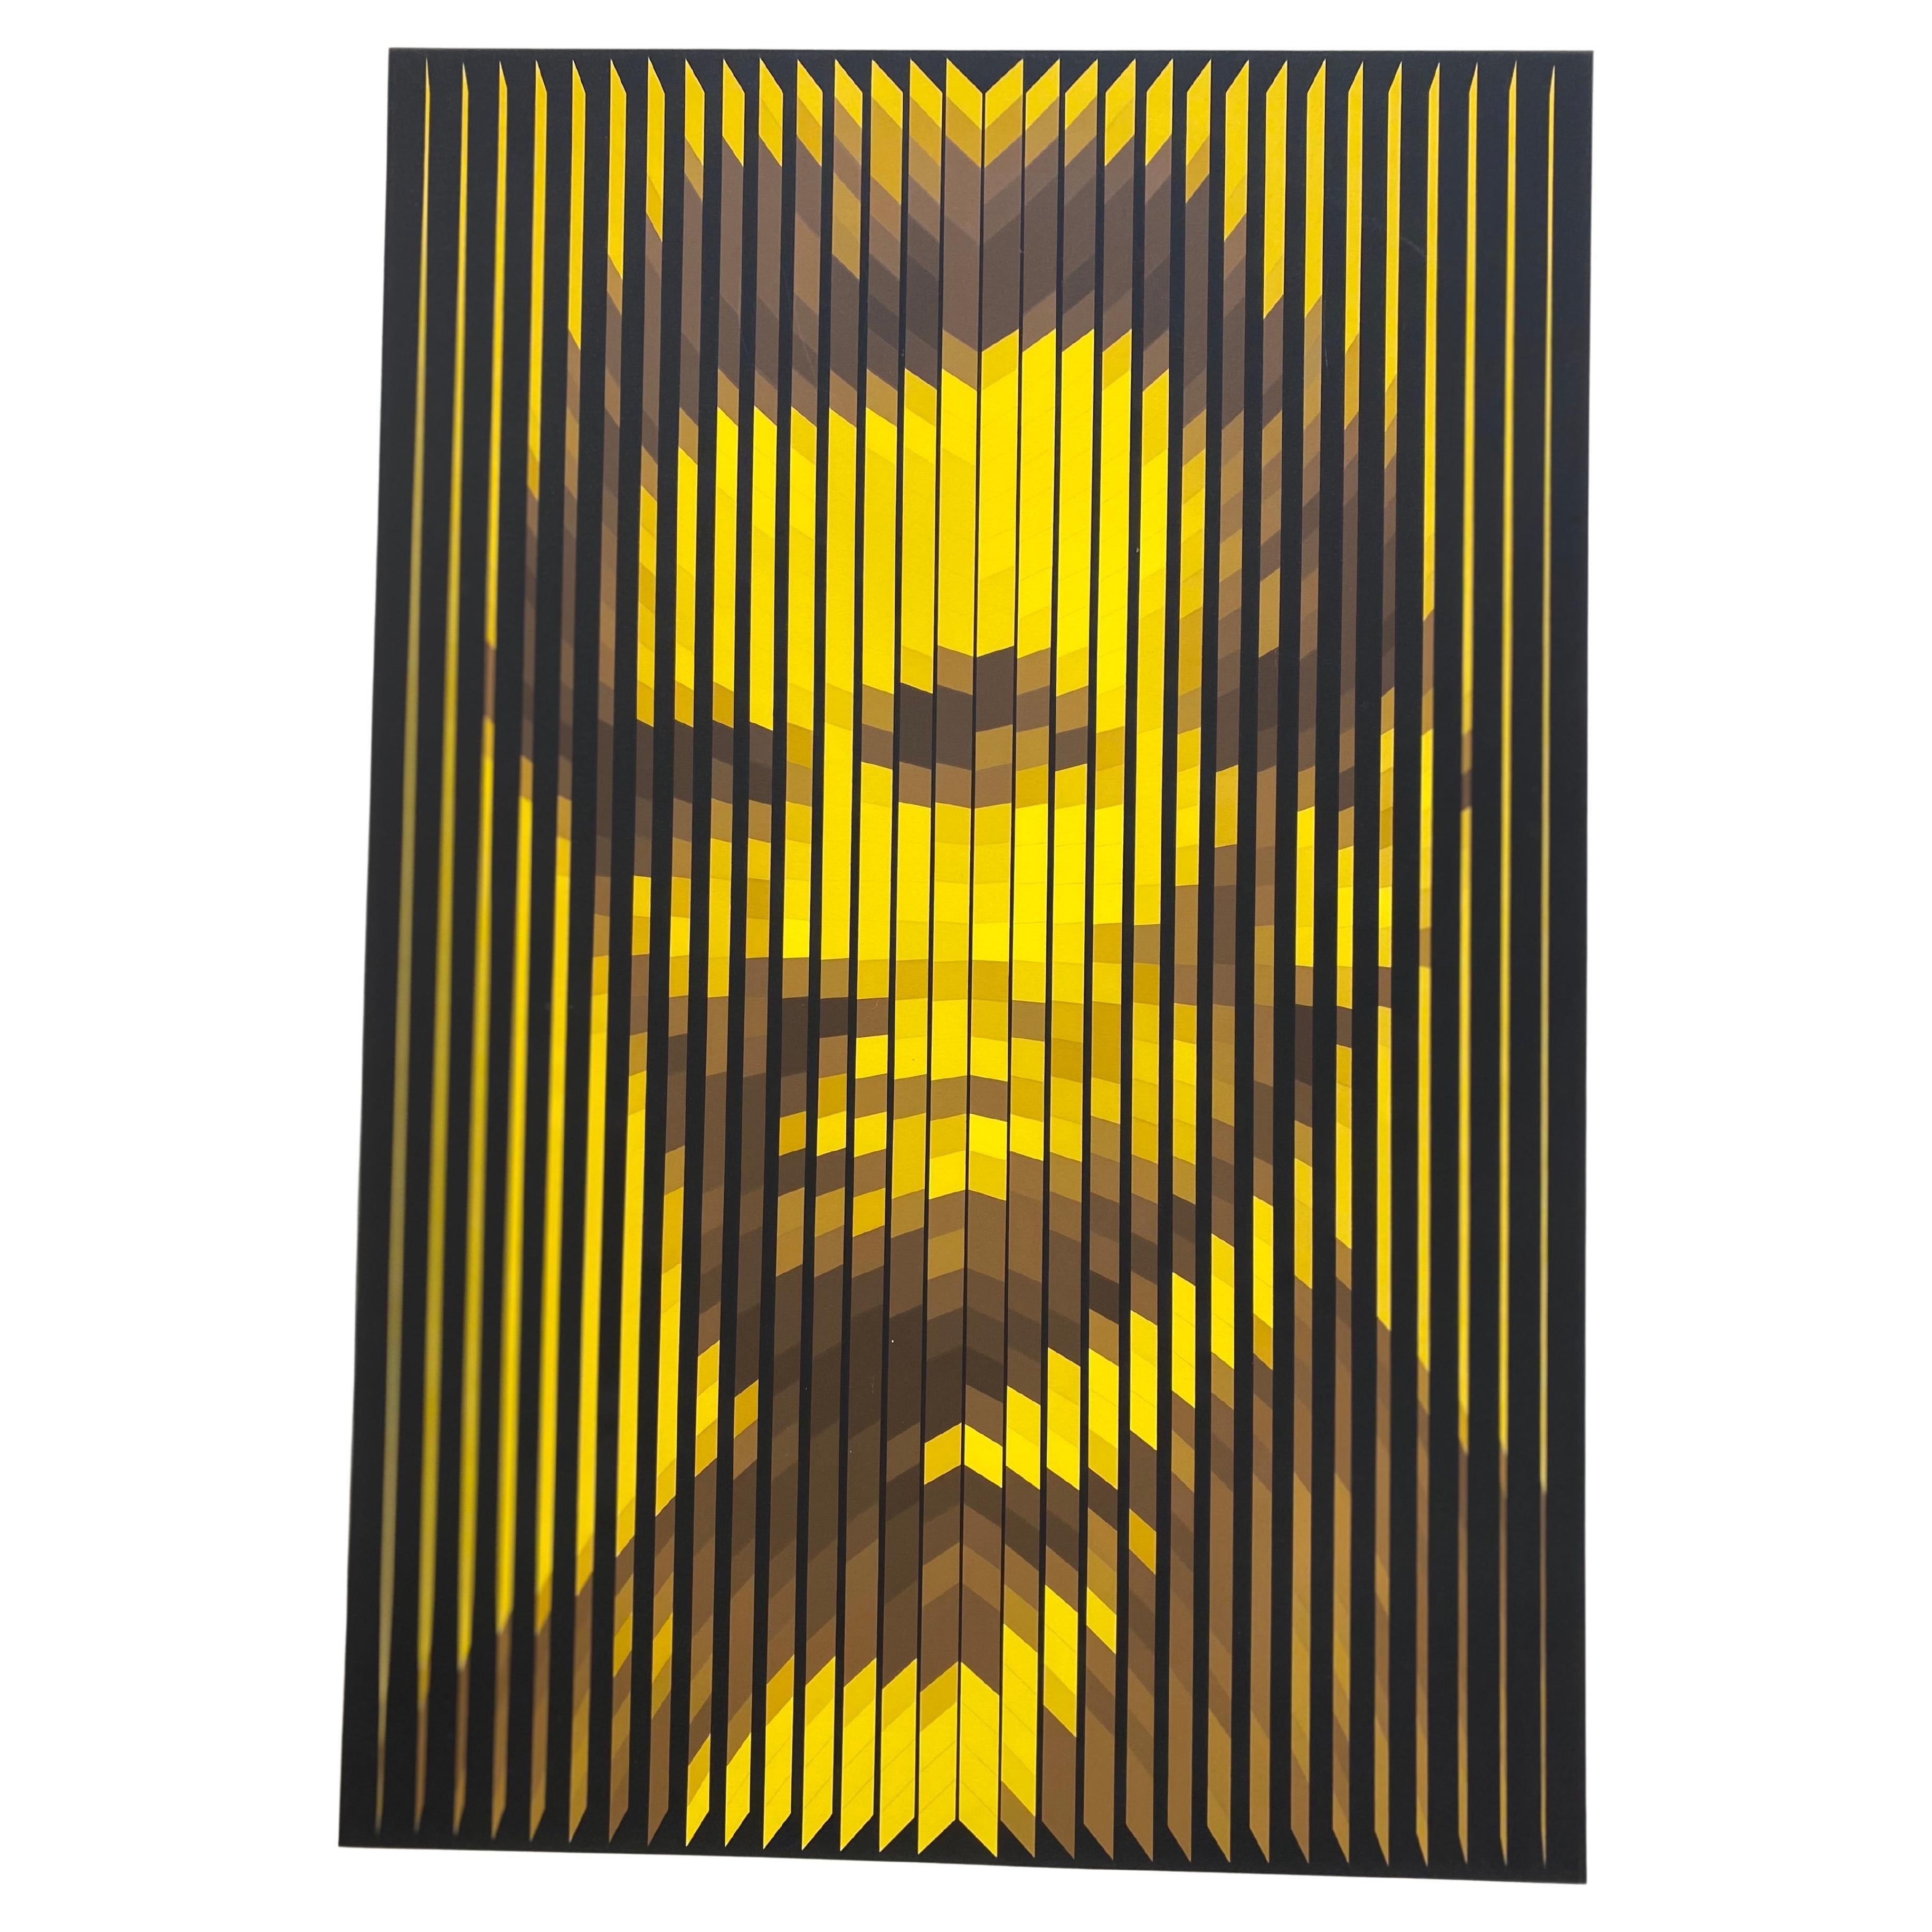 YVARAL – „Abraham Lincoln, 1979